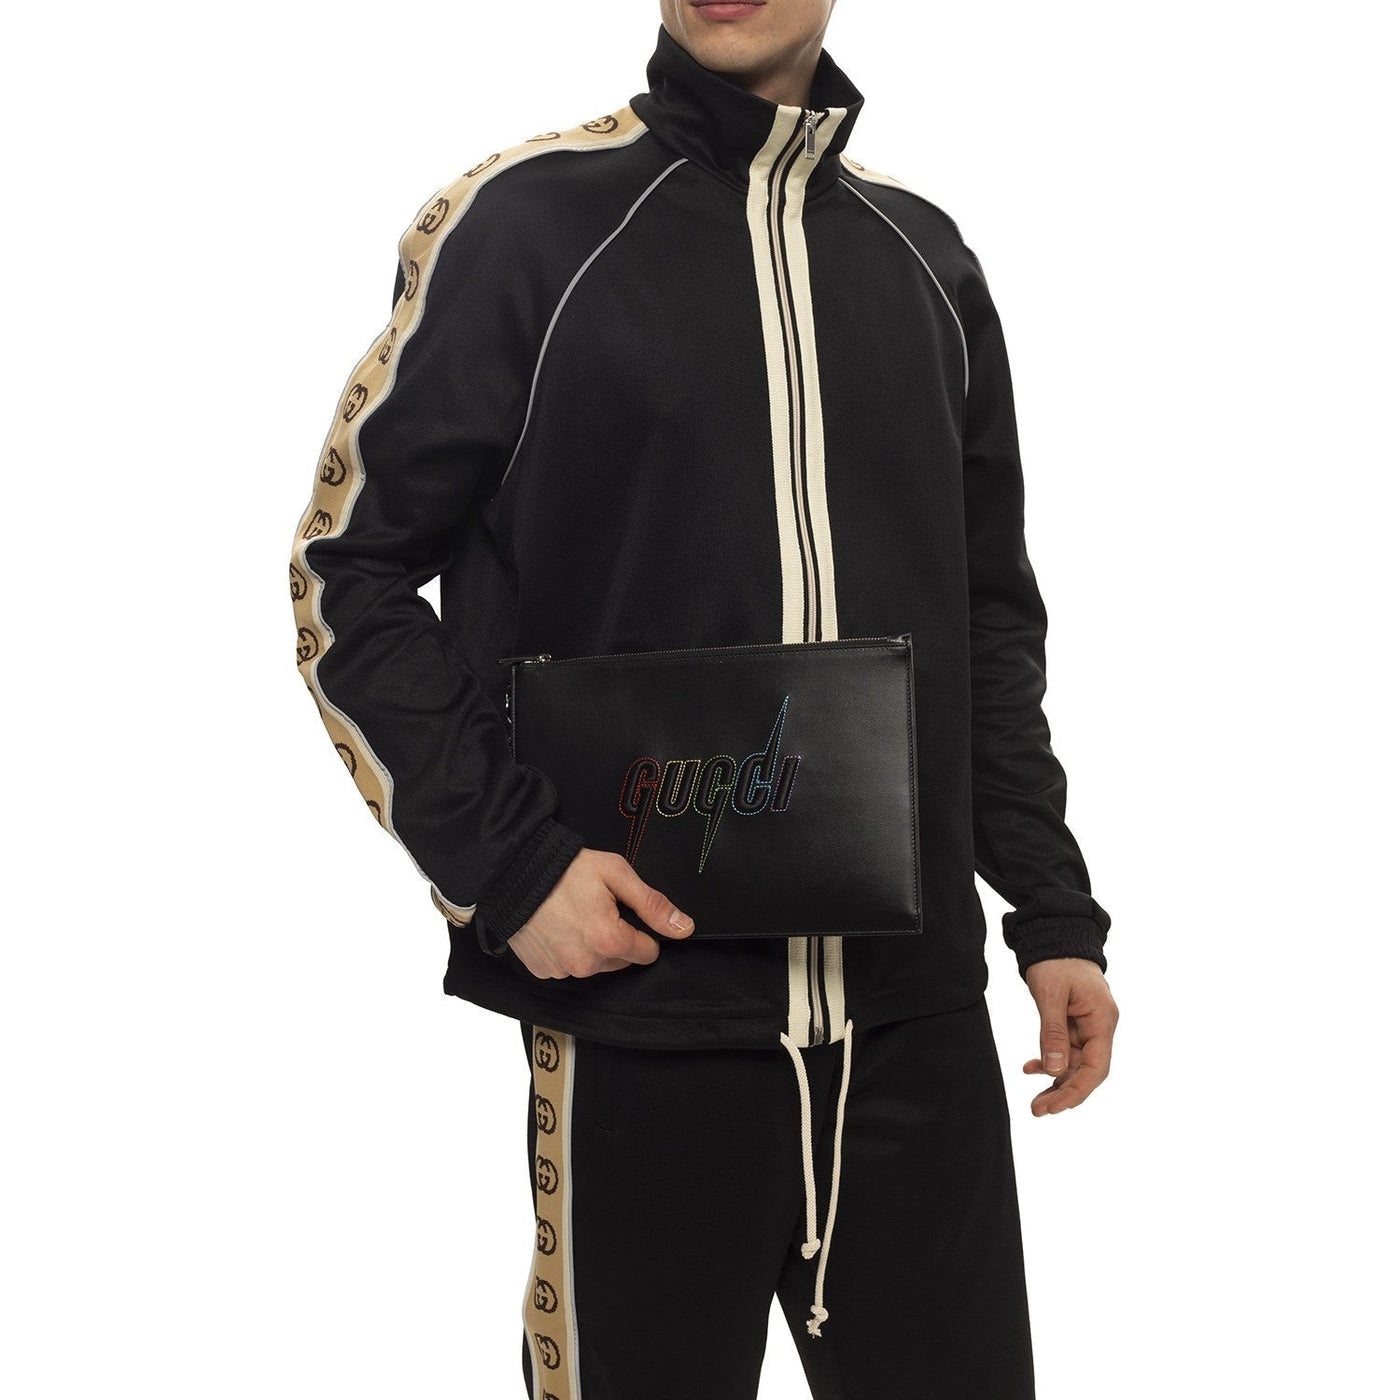 Gucci Blade Embroidered Black Leather Pouch Wristlet Bag - LUXURYMRKT